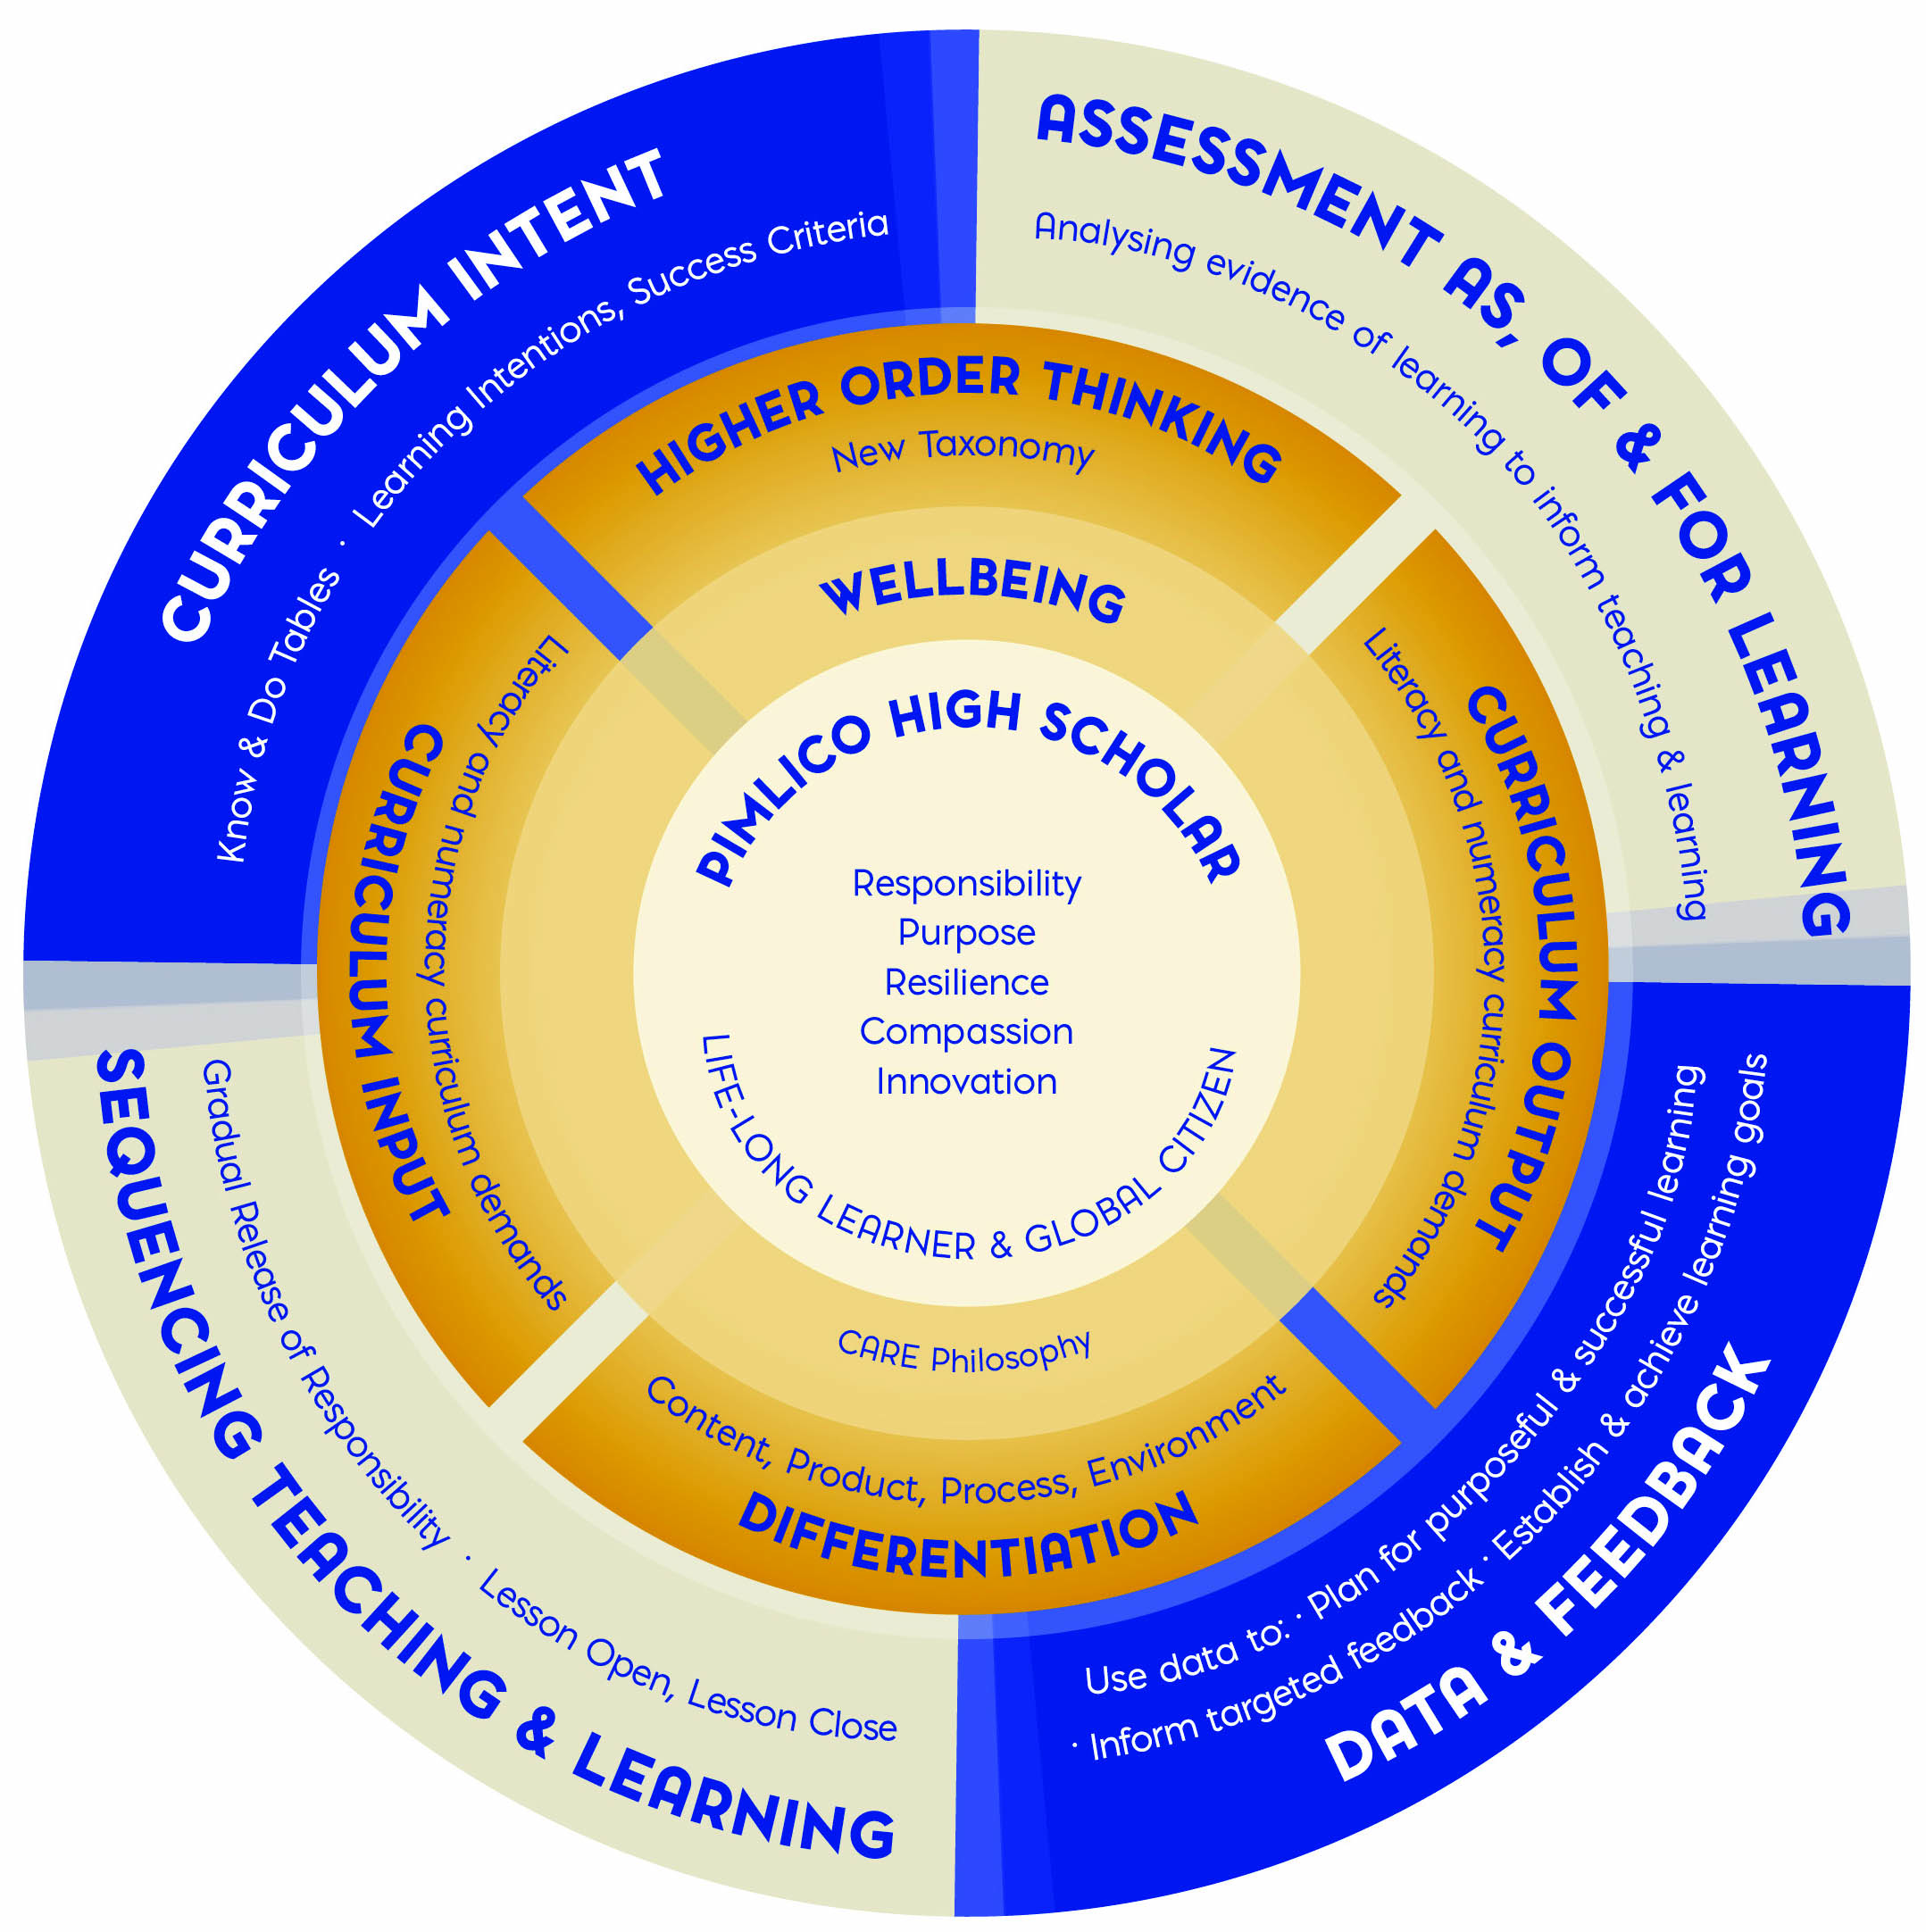 Pedagogical Framework